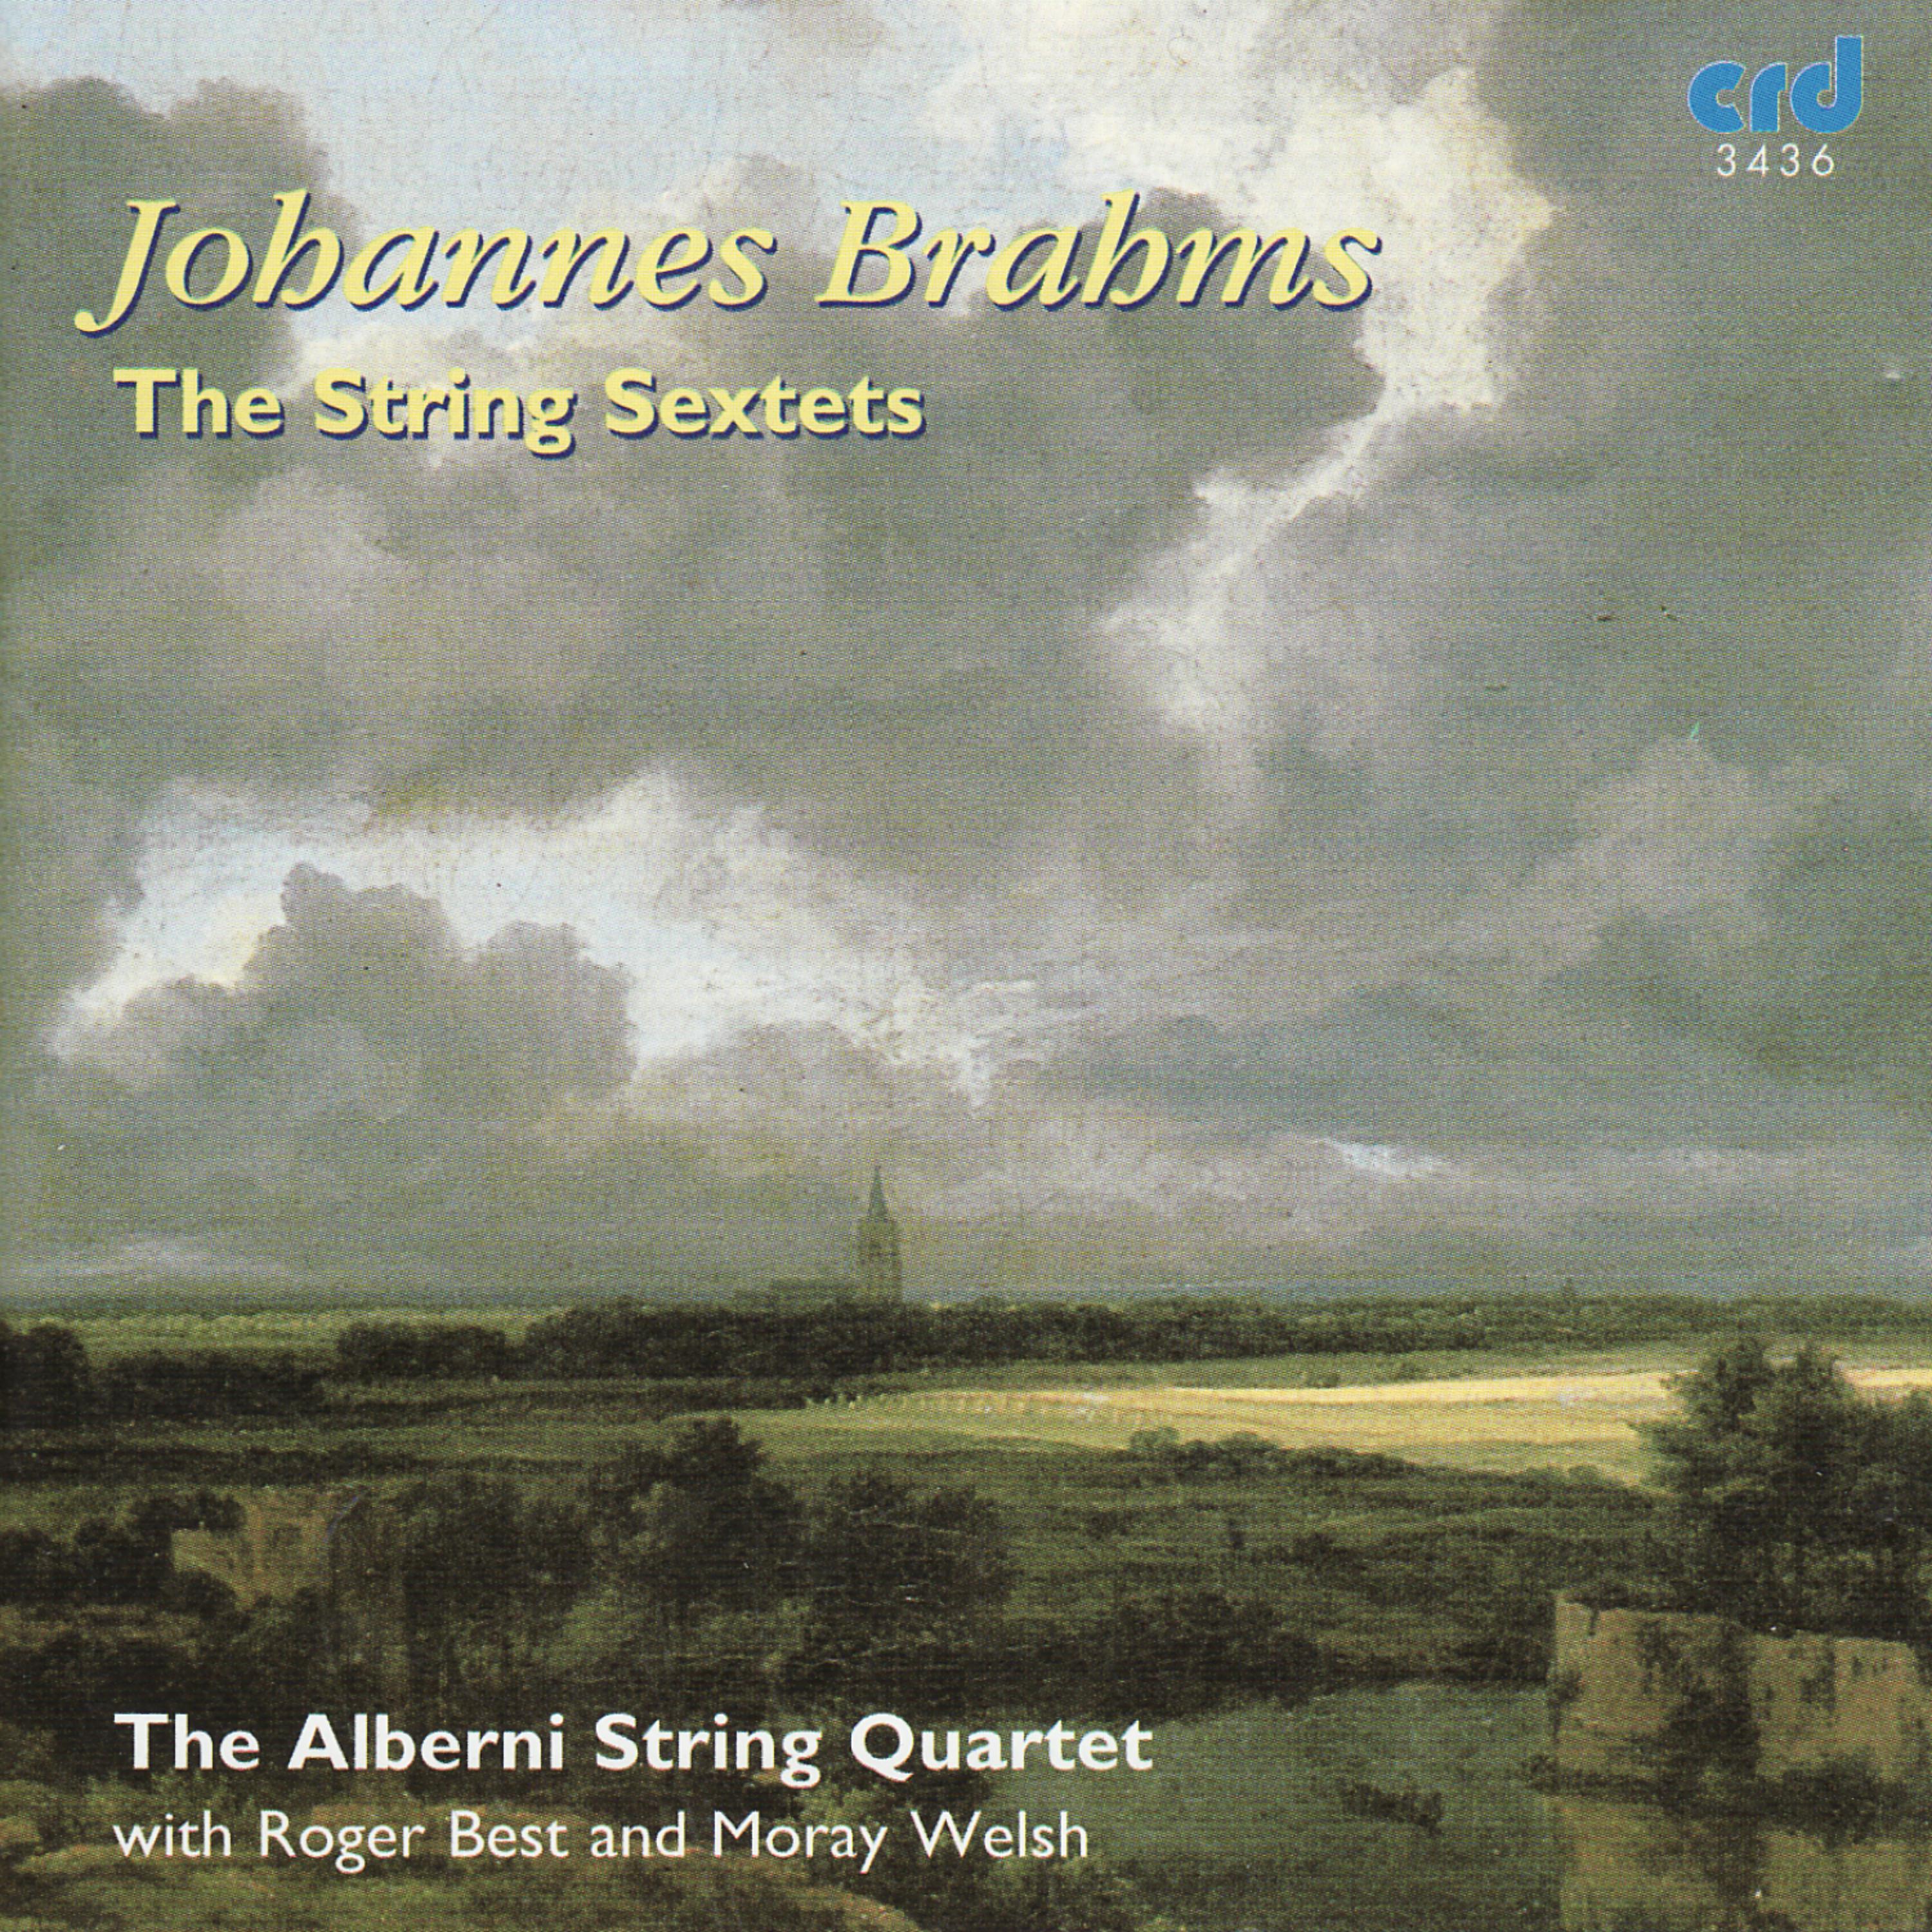 Постер альбома Brahms: The String Sextets